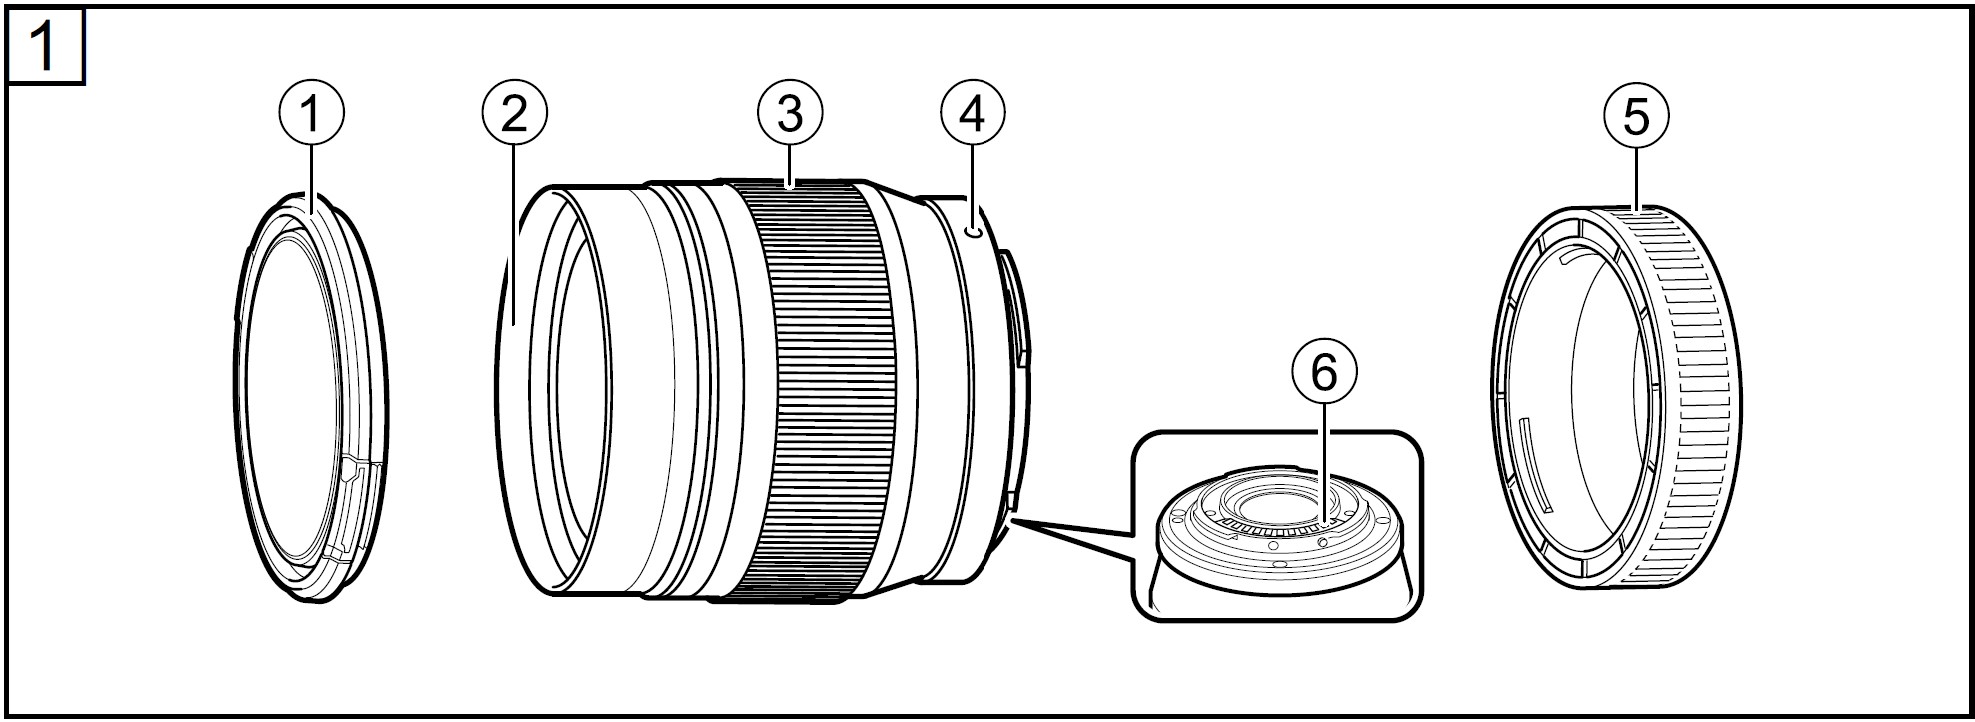 OLYMPUS-M.Zuiko-Digital-75mm-Lens-Instruction-Manual-1